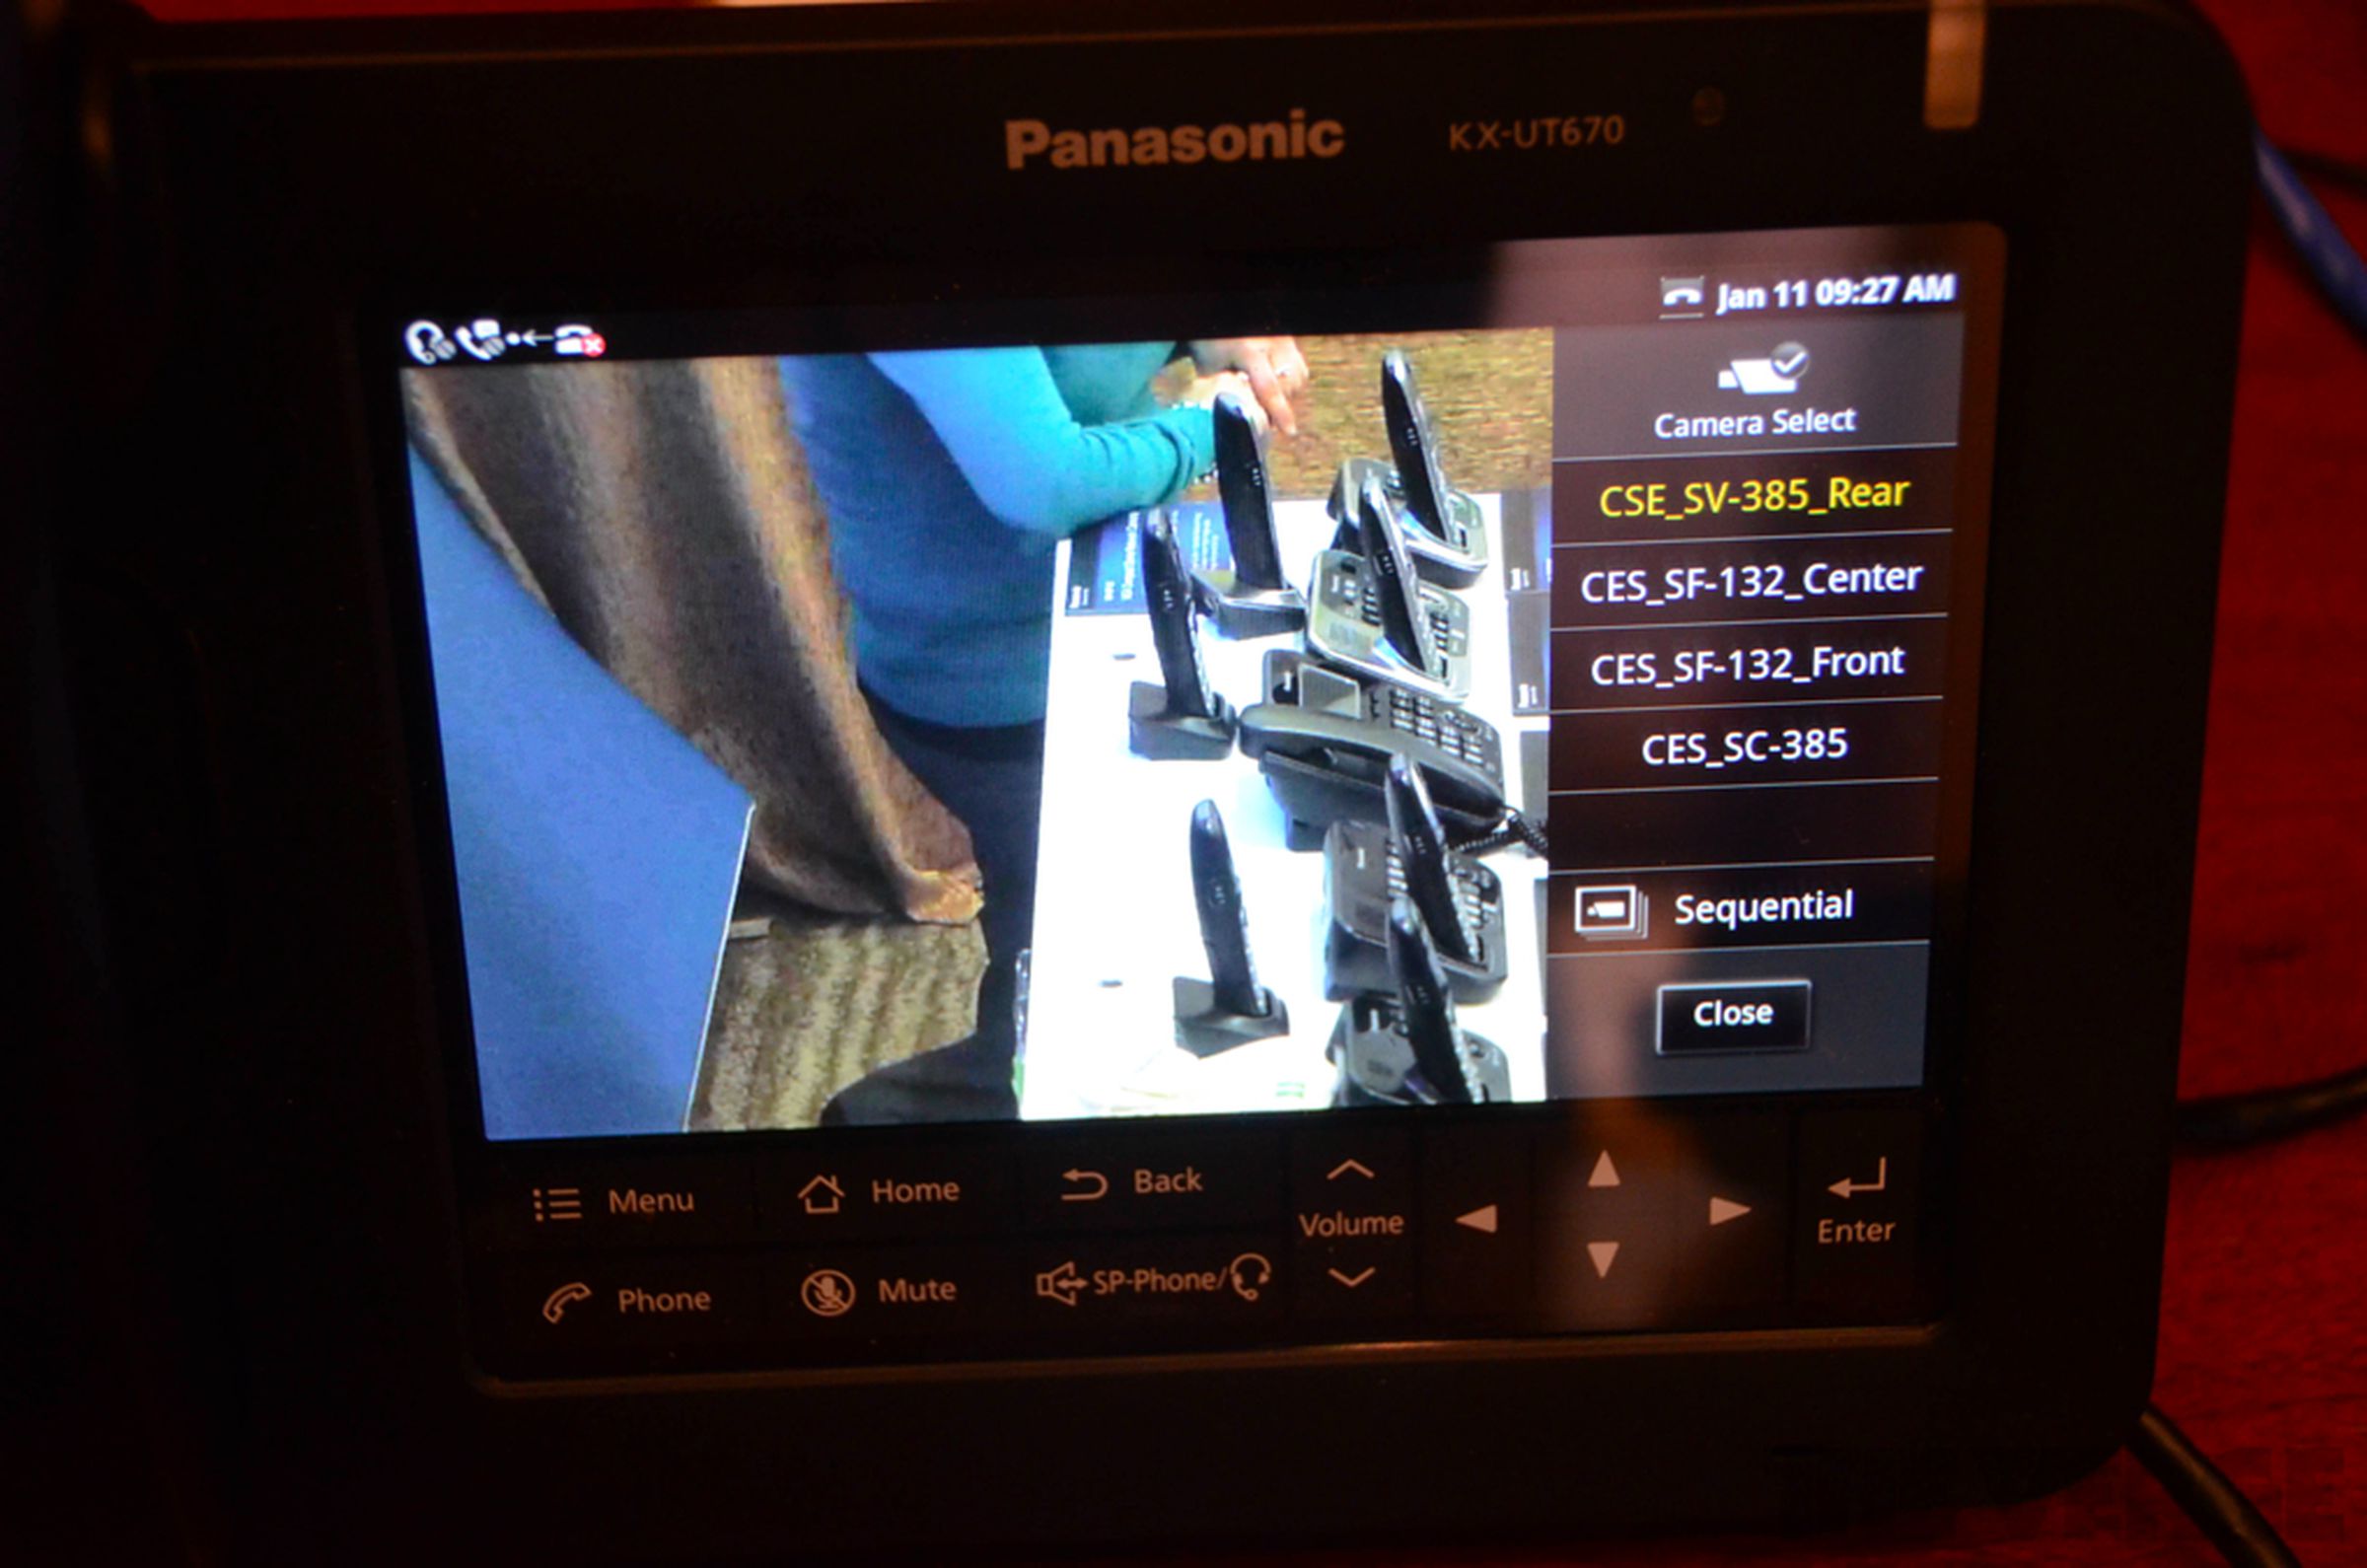 Panasonic KX-UT870 hands-on pictures